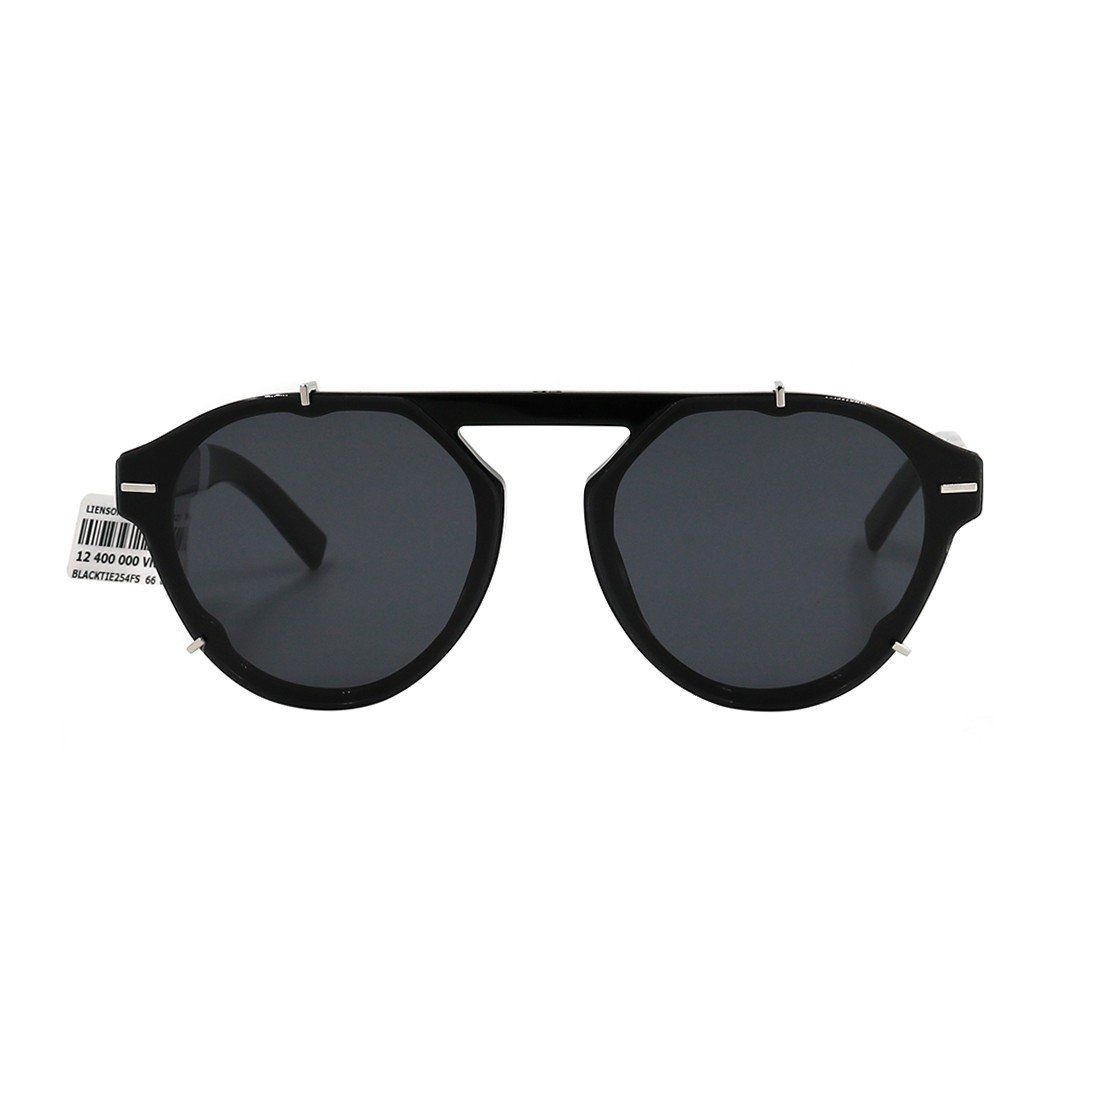 Dior Homme  Black Tie 263S Sunglasses  YouTube